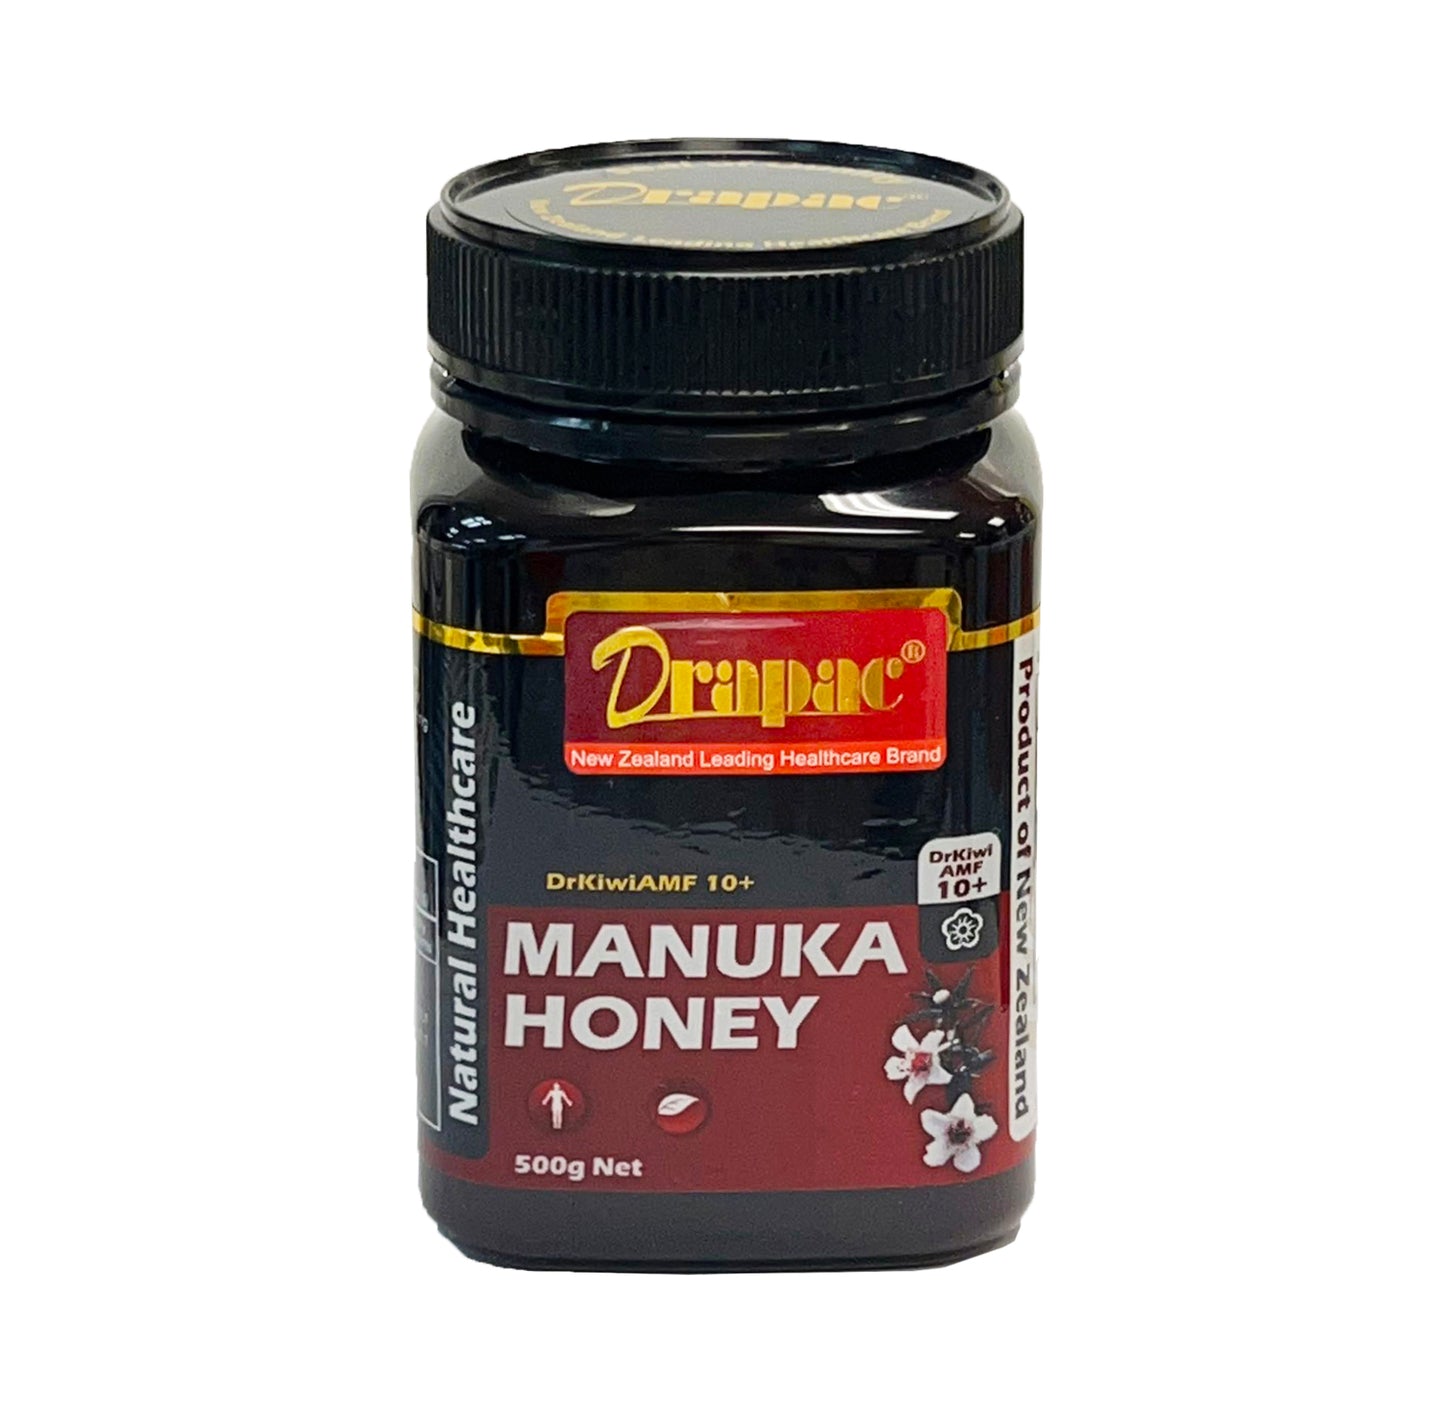 Drapac Manuka Honey DrKiwi AMF 10+ 500g